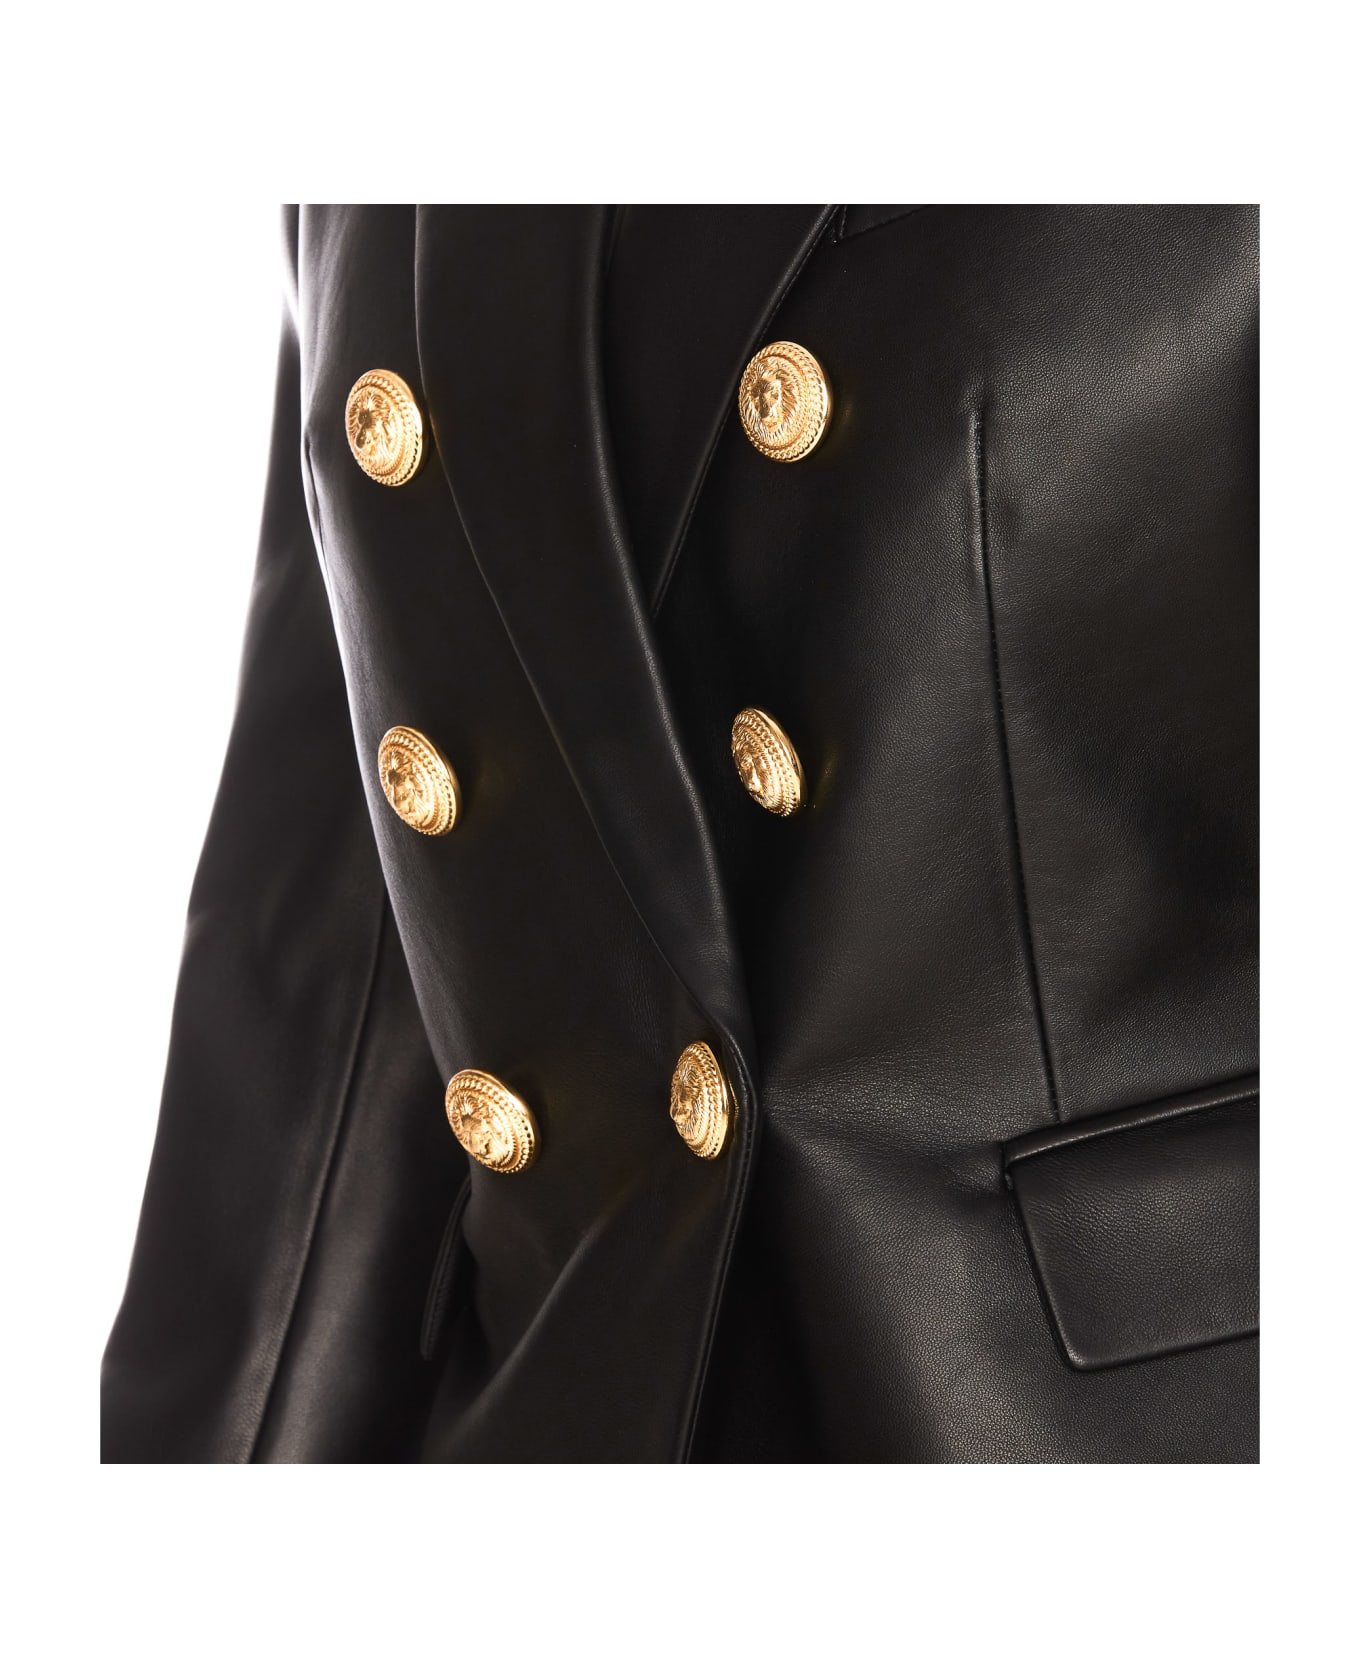 Balmain 6 Buttons Classic Leather Jacket - Black